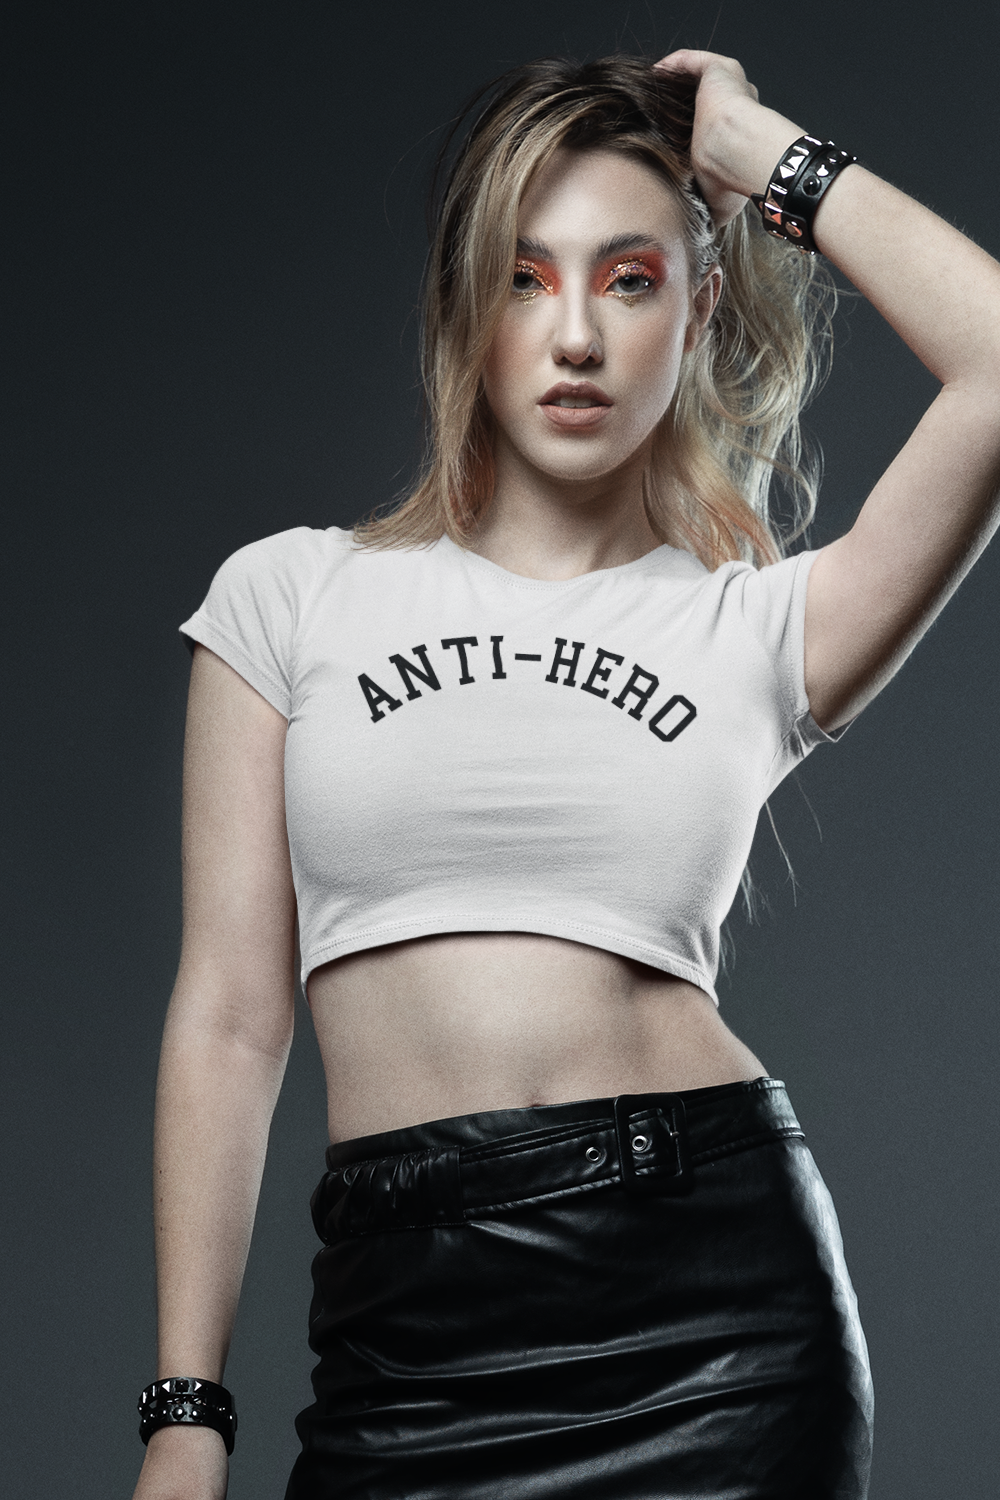 Anti-Hero Women's Fitted Crop Top T-Shirt by OniTakai Original MixiChic OniTakai Design